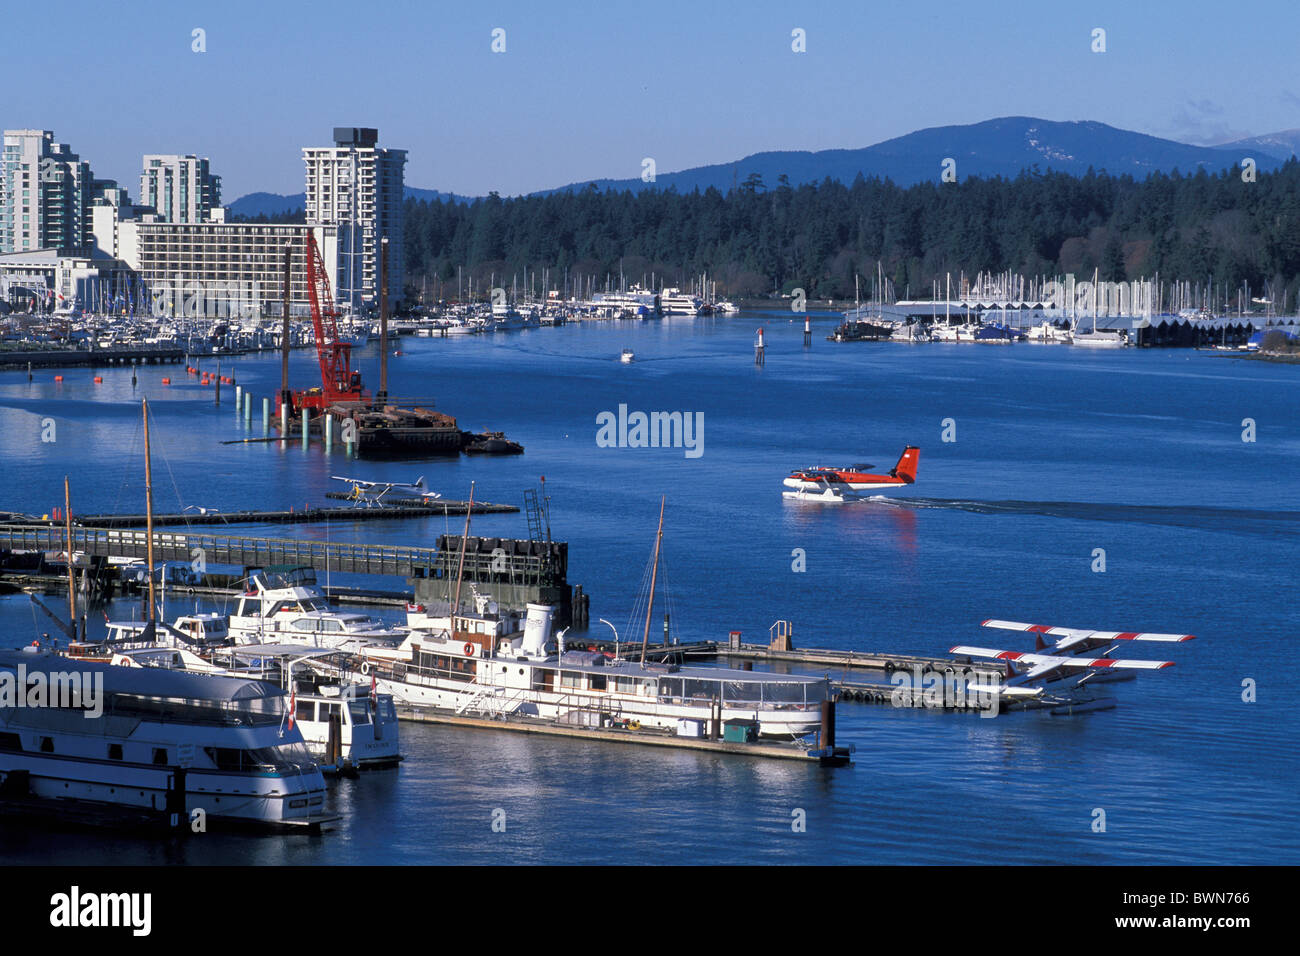 Canada North America America Float Plane Vancouver British Columbia harbor harbor aeroplane boats water for Stock Photo